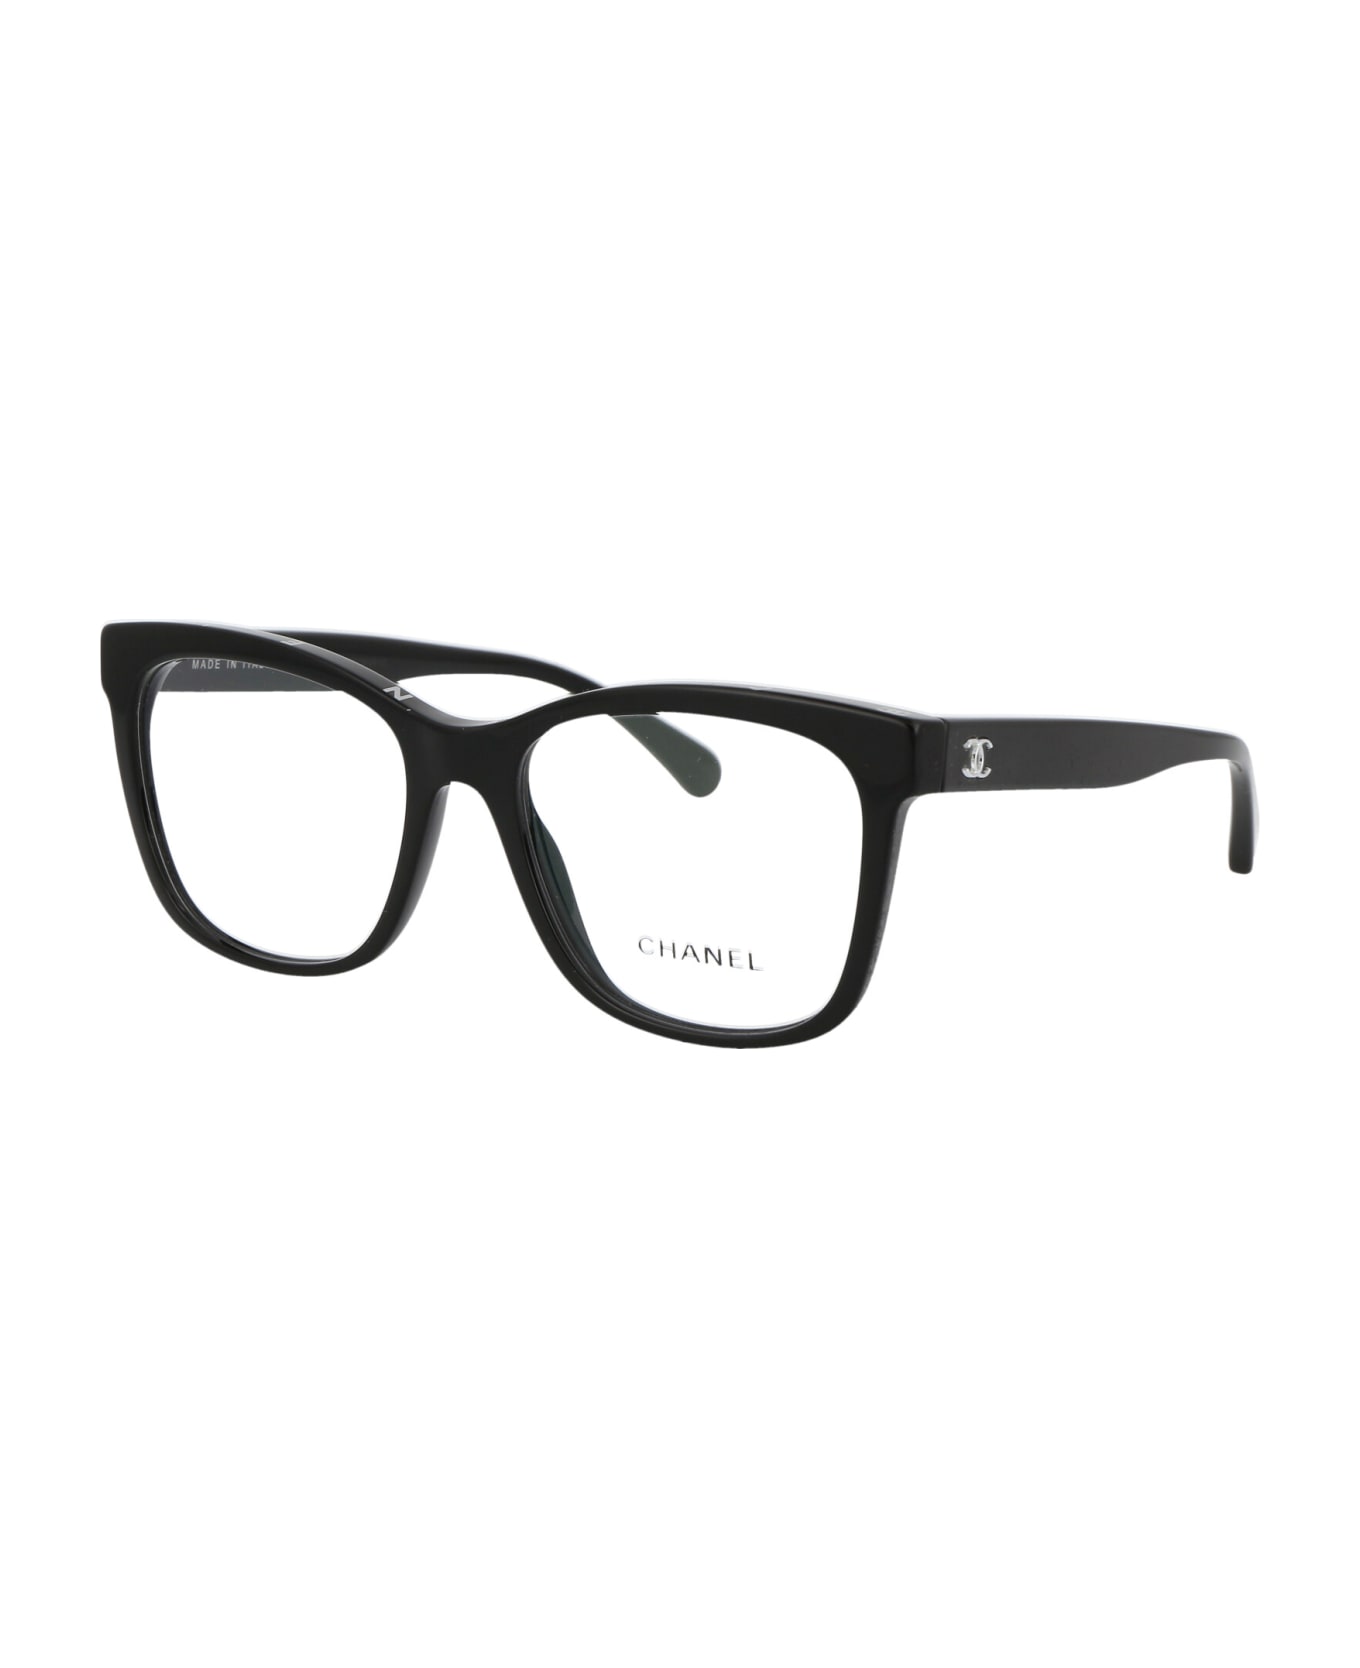 Chanel 0ch3392 Glasses - C501 BLACK